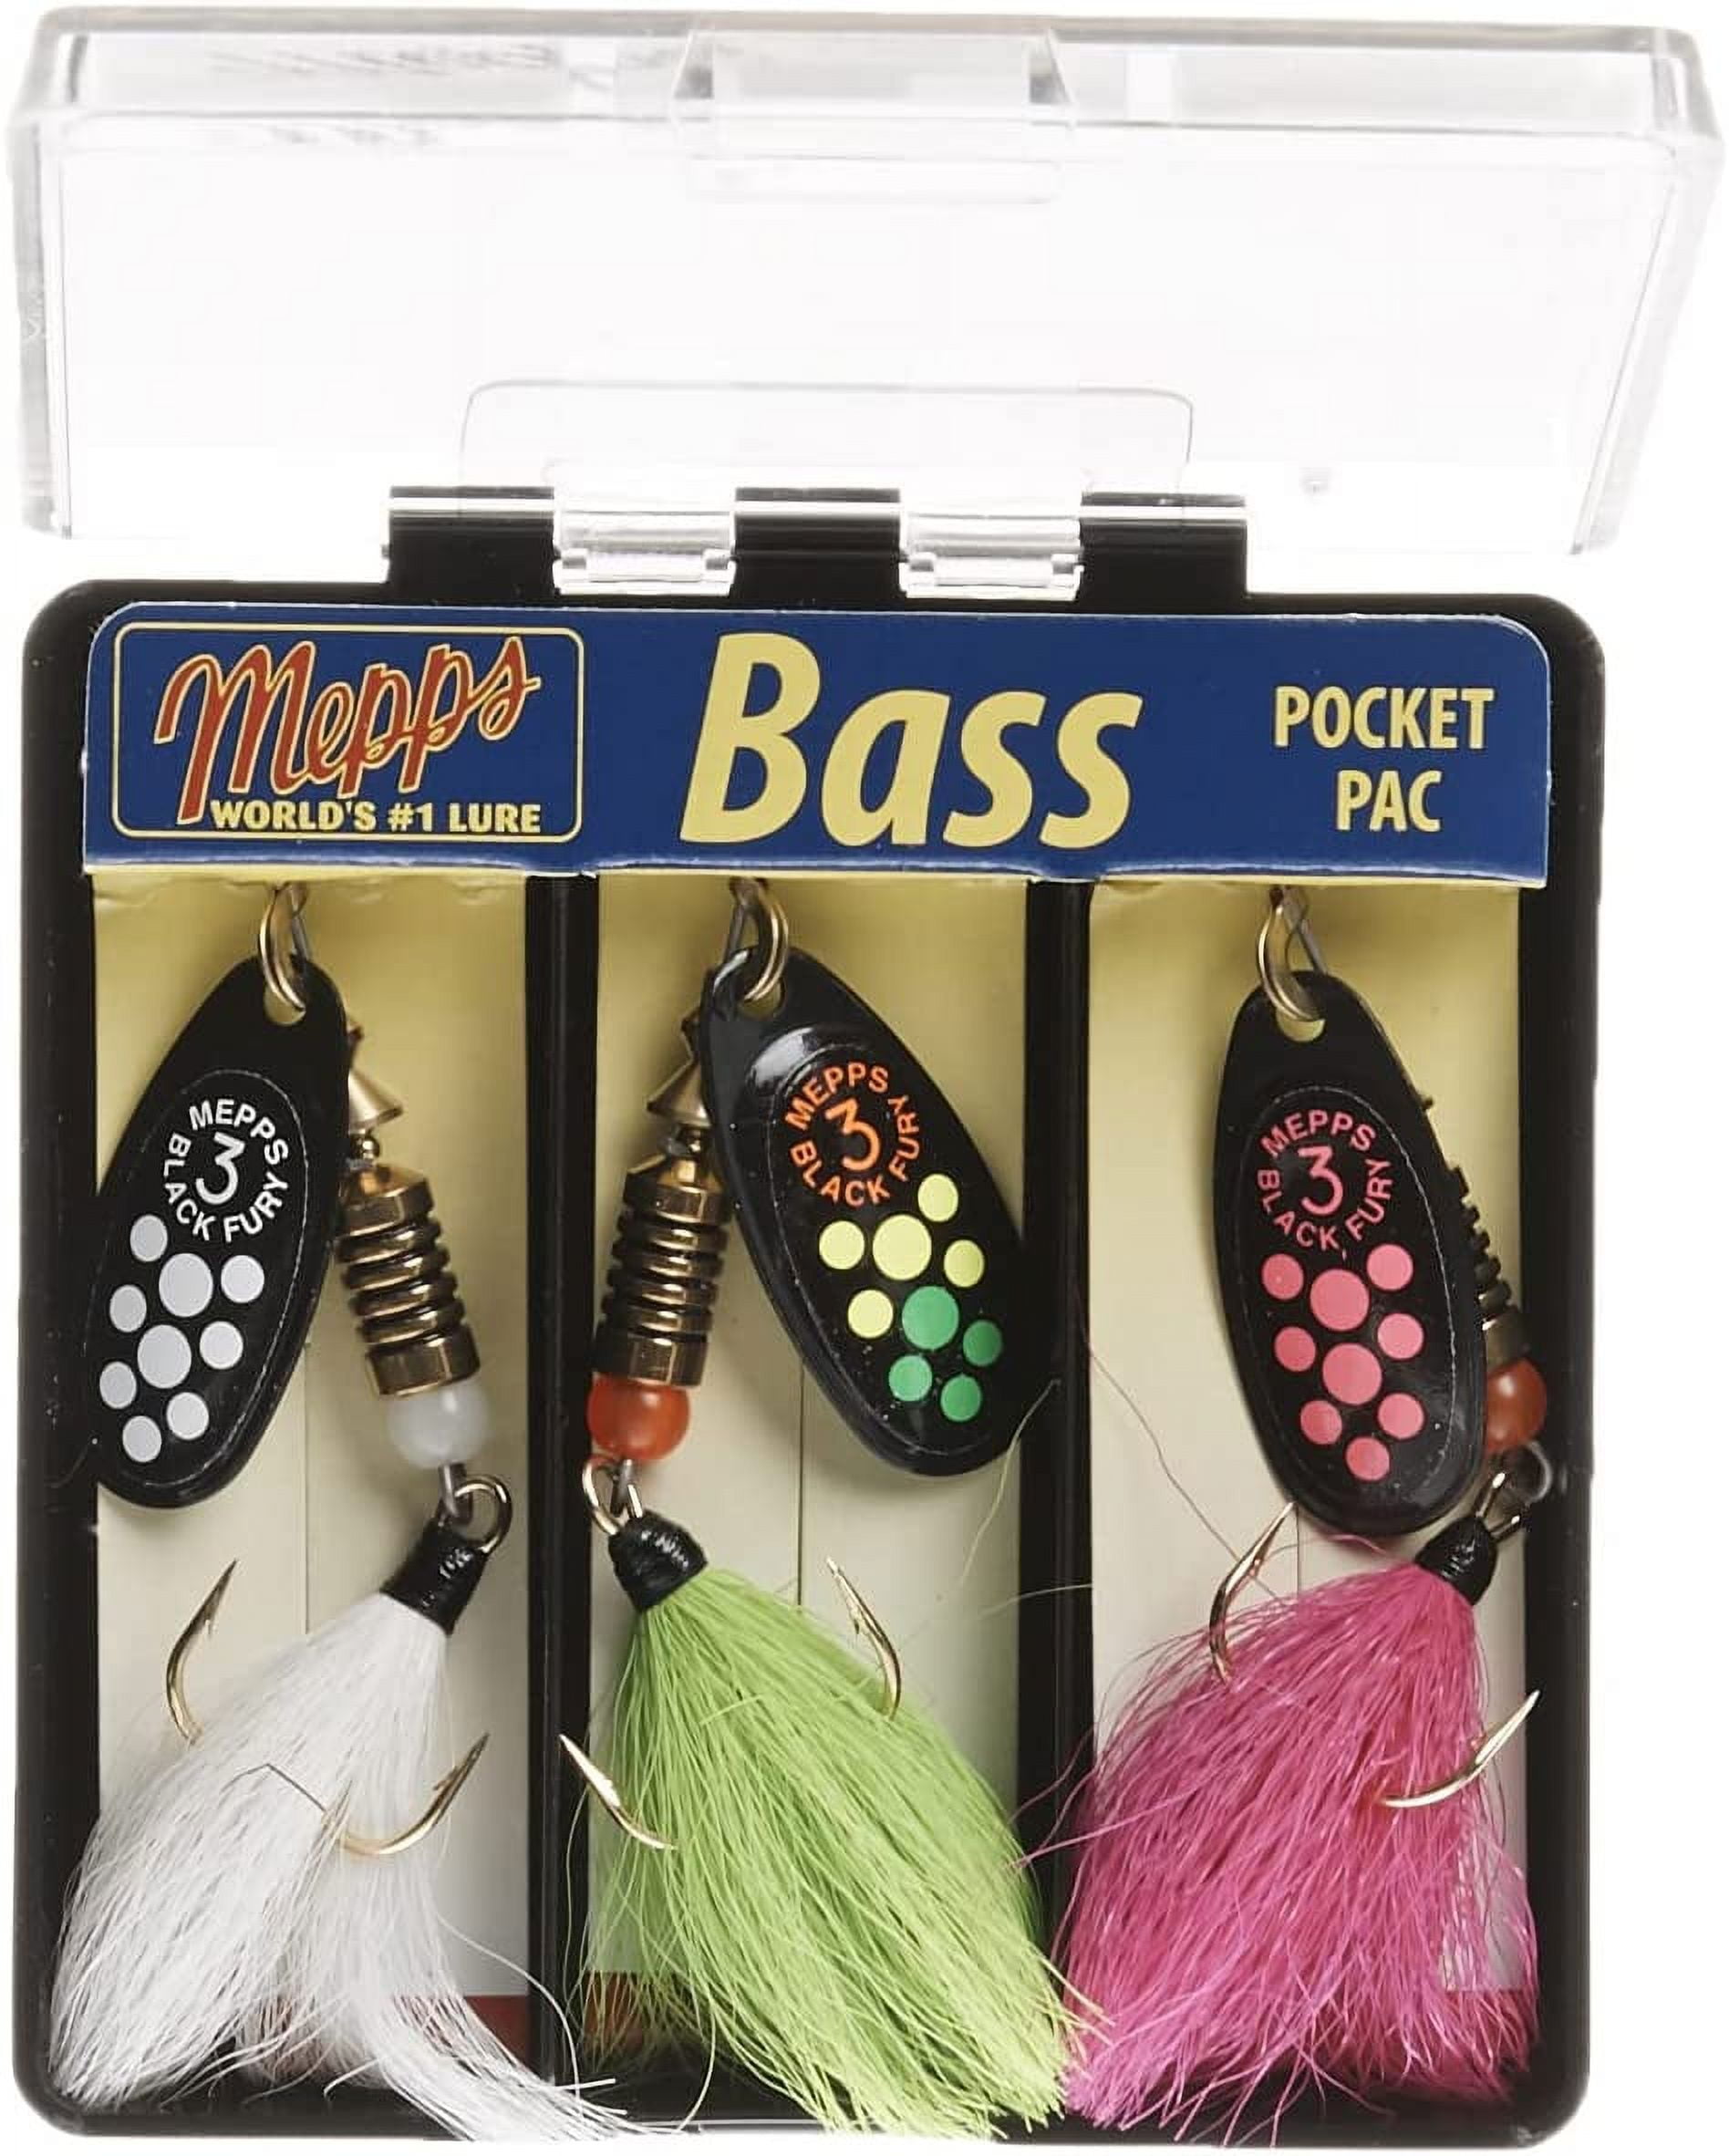 Mepps Bass Pocket Pac - #3 Black Fury Spinners Dressed Treble Hook 